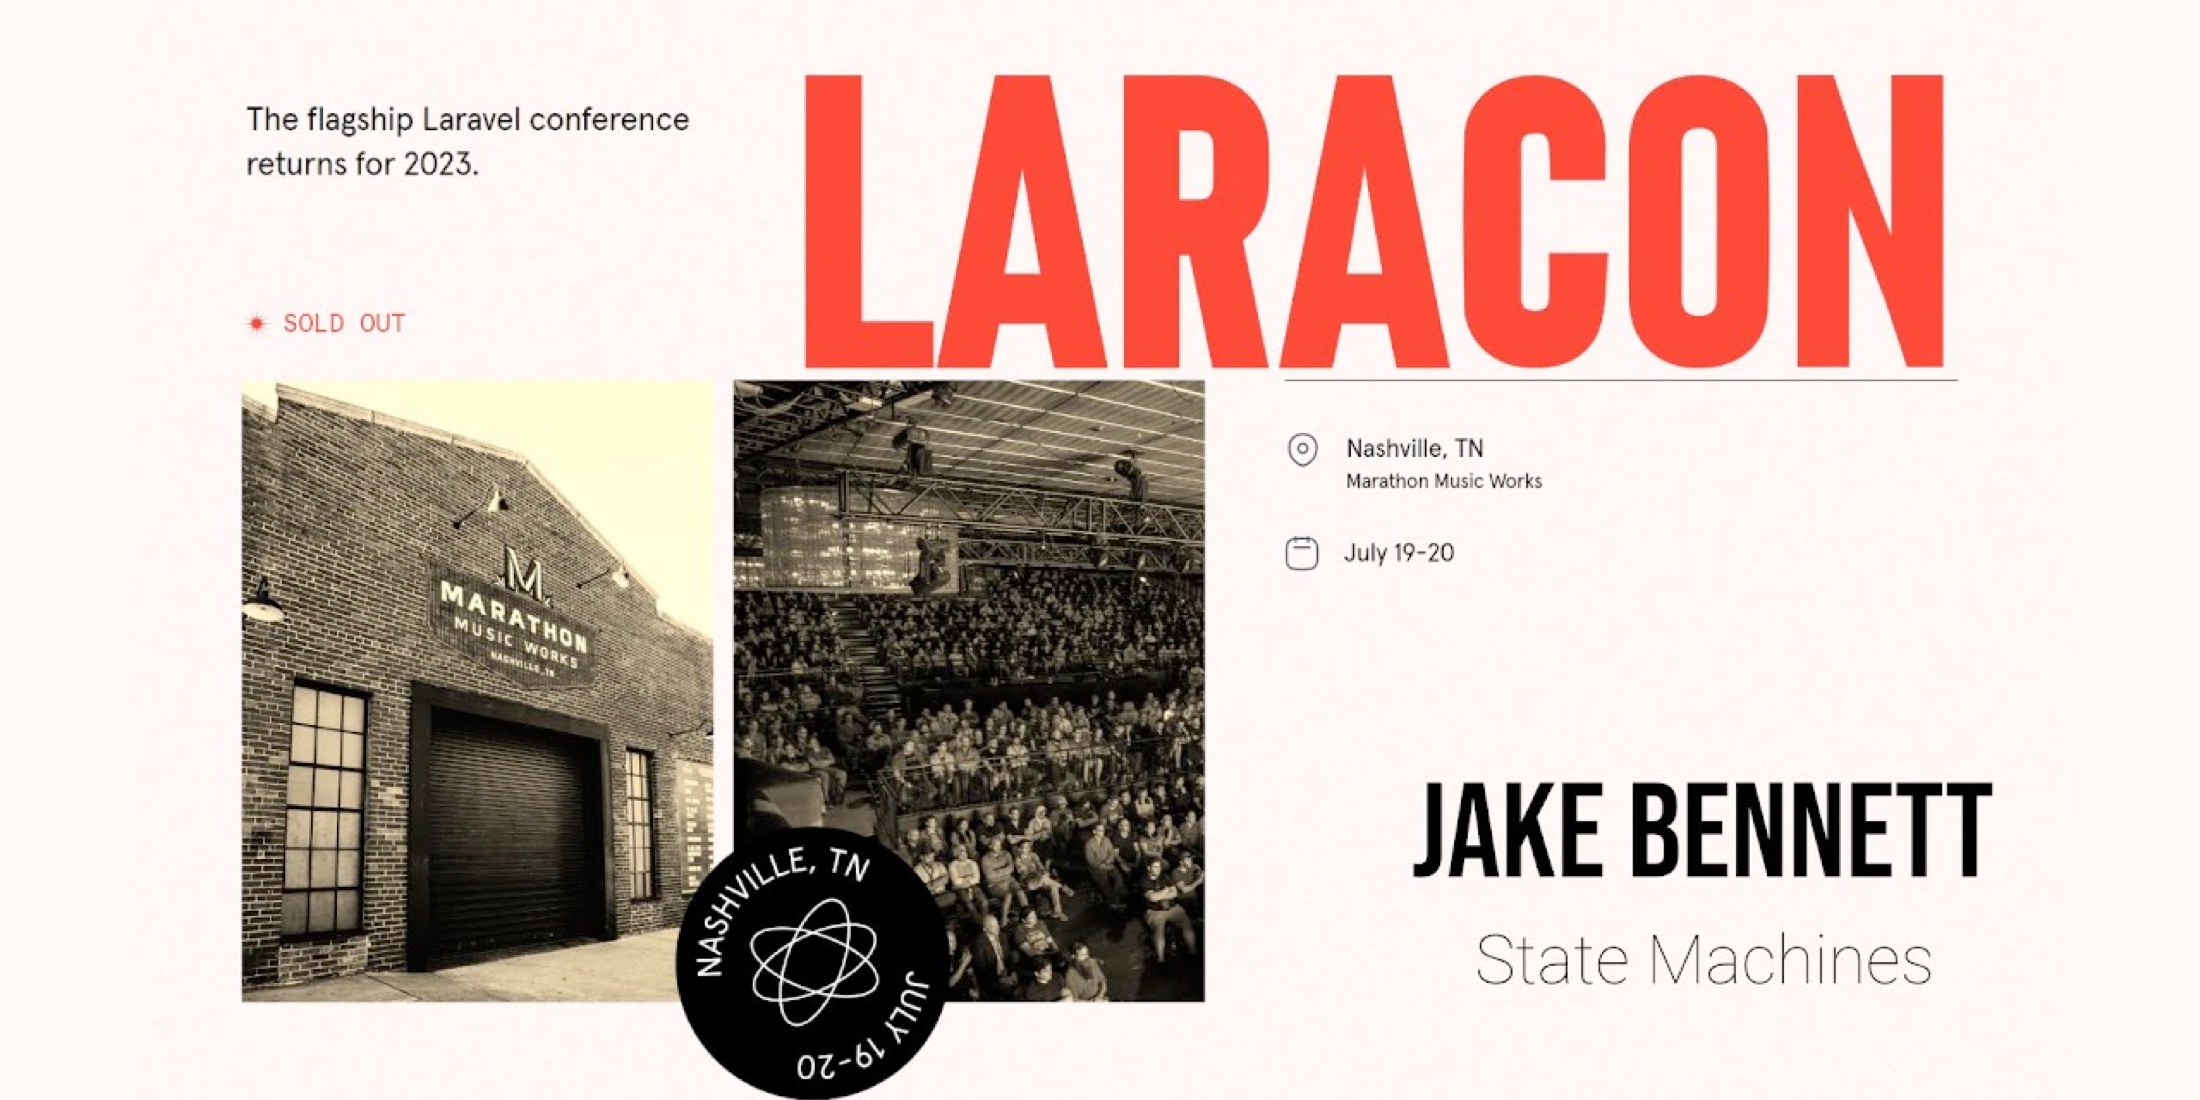 Watch Jake Bennett's "State Machines" talk from Laracon image